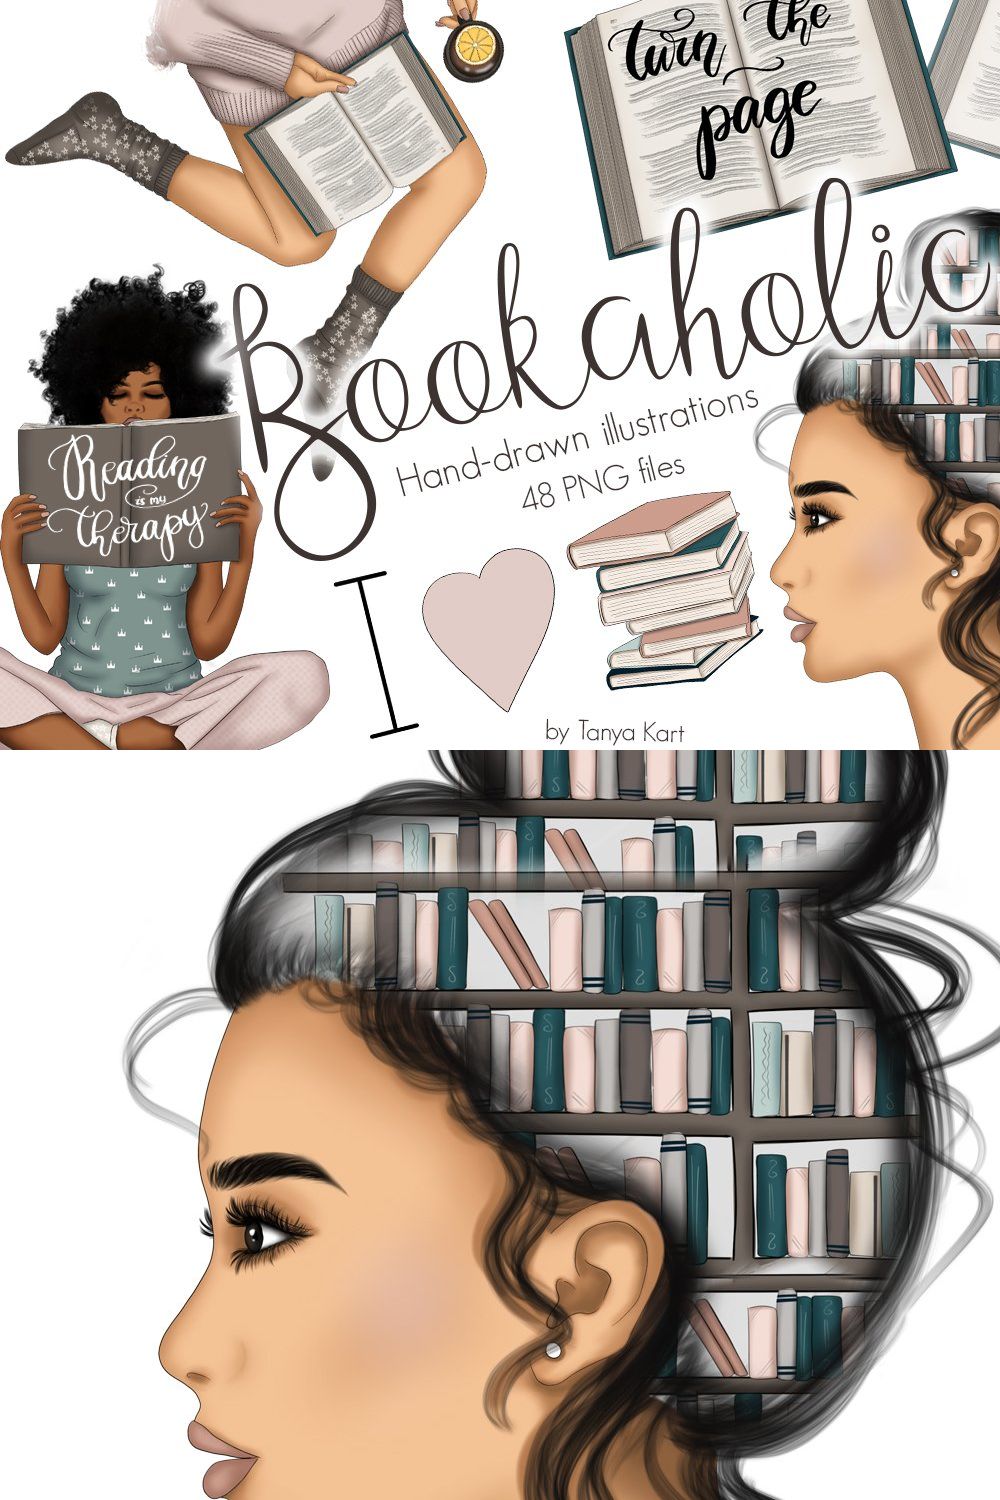 Bookaholic Clipart & Patterns pinterest preview image.